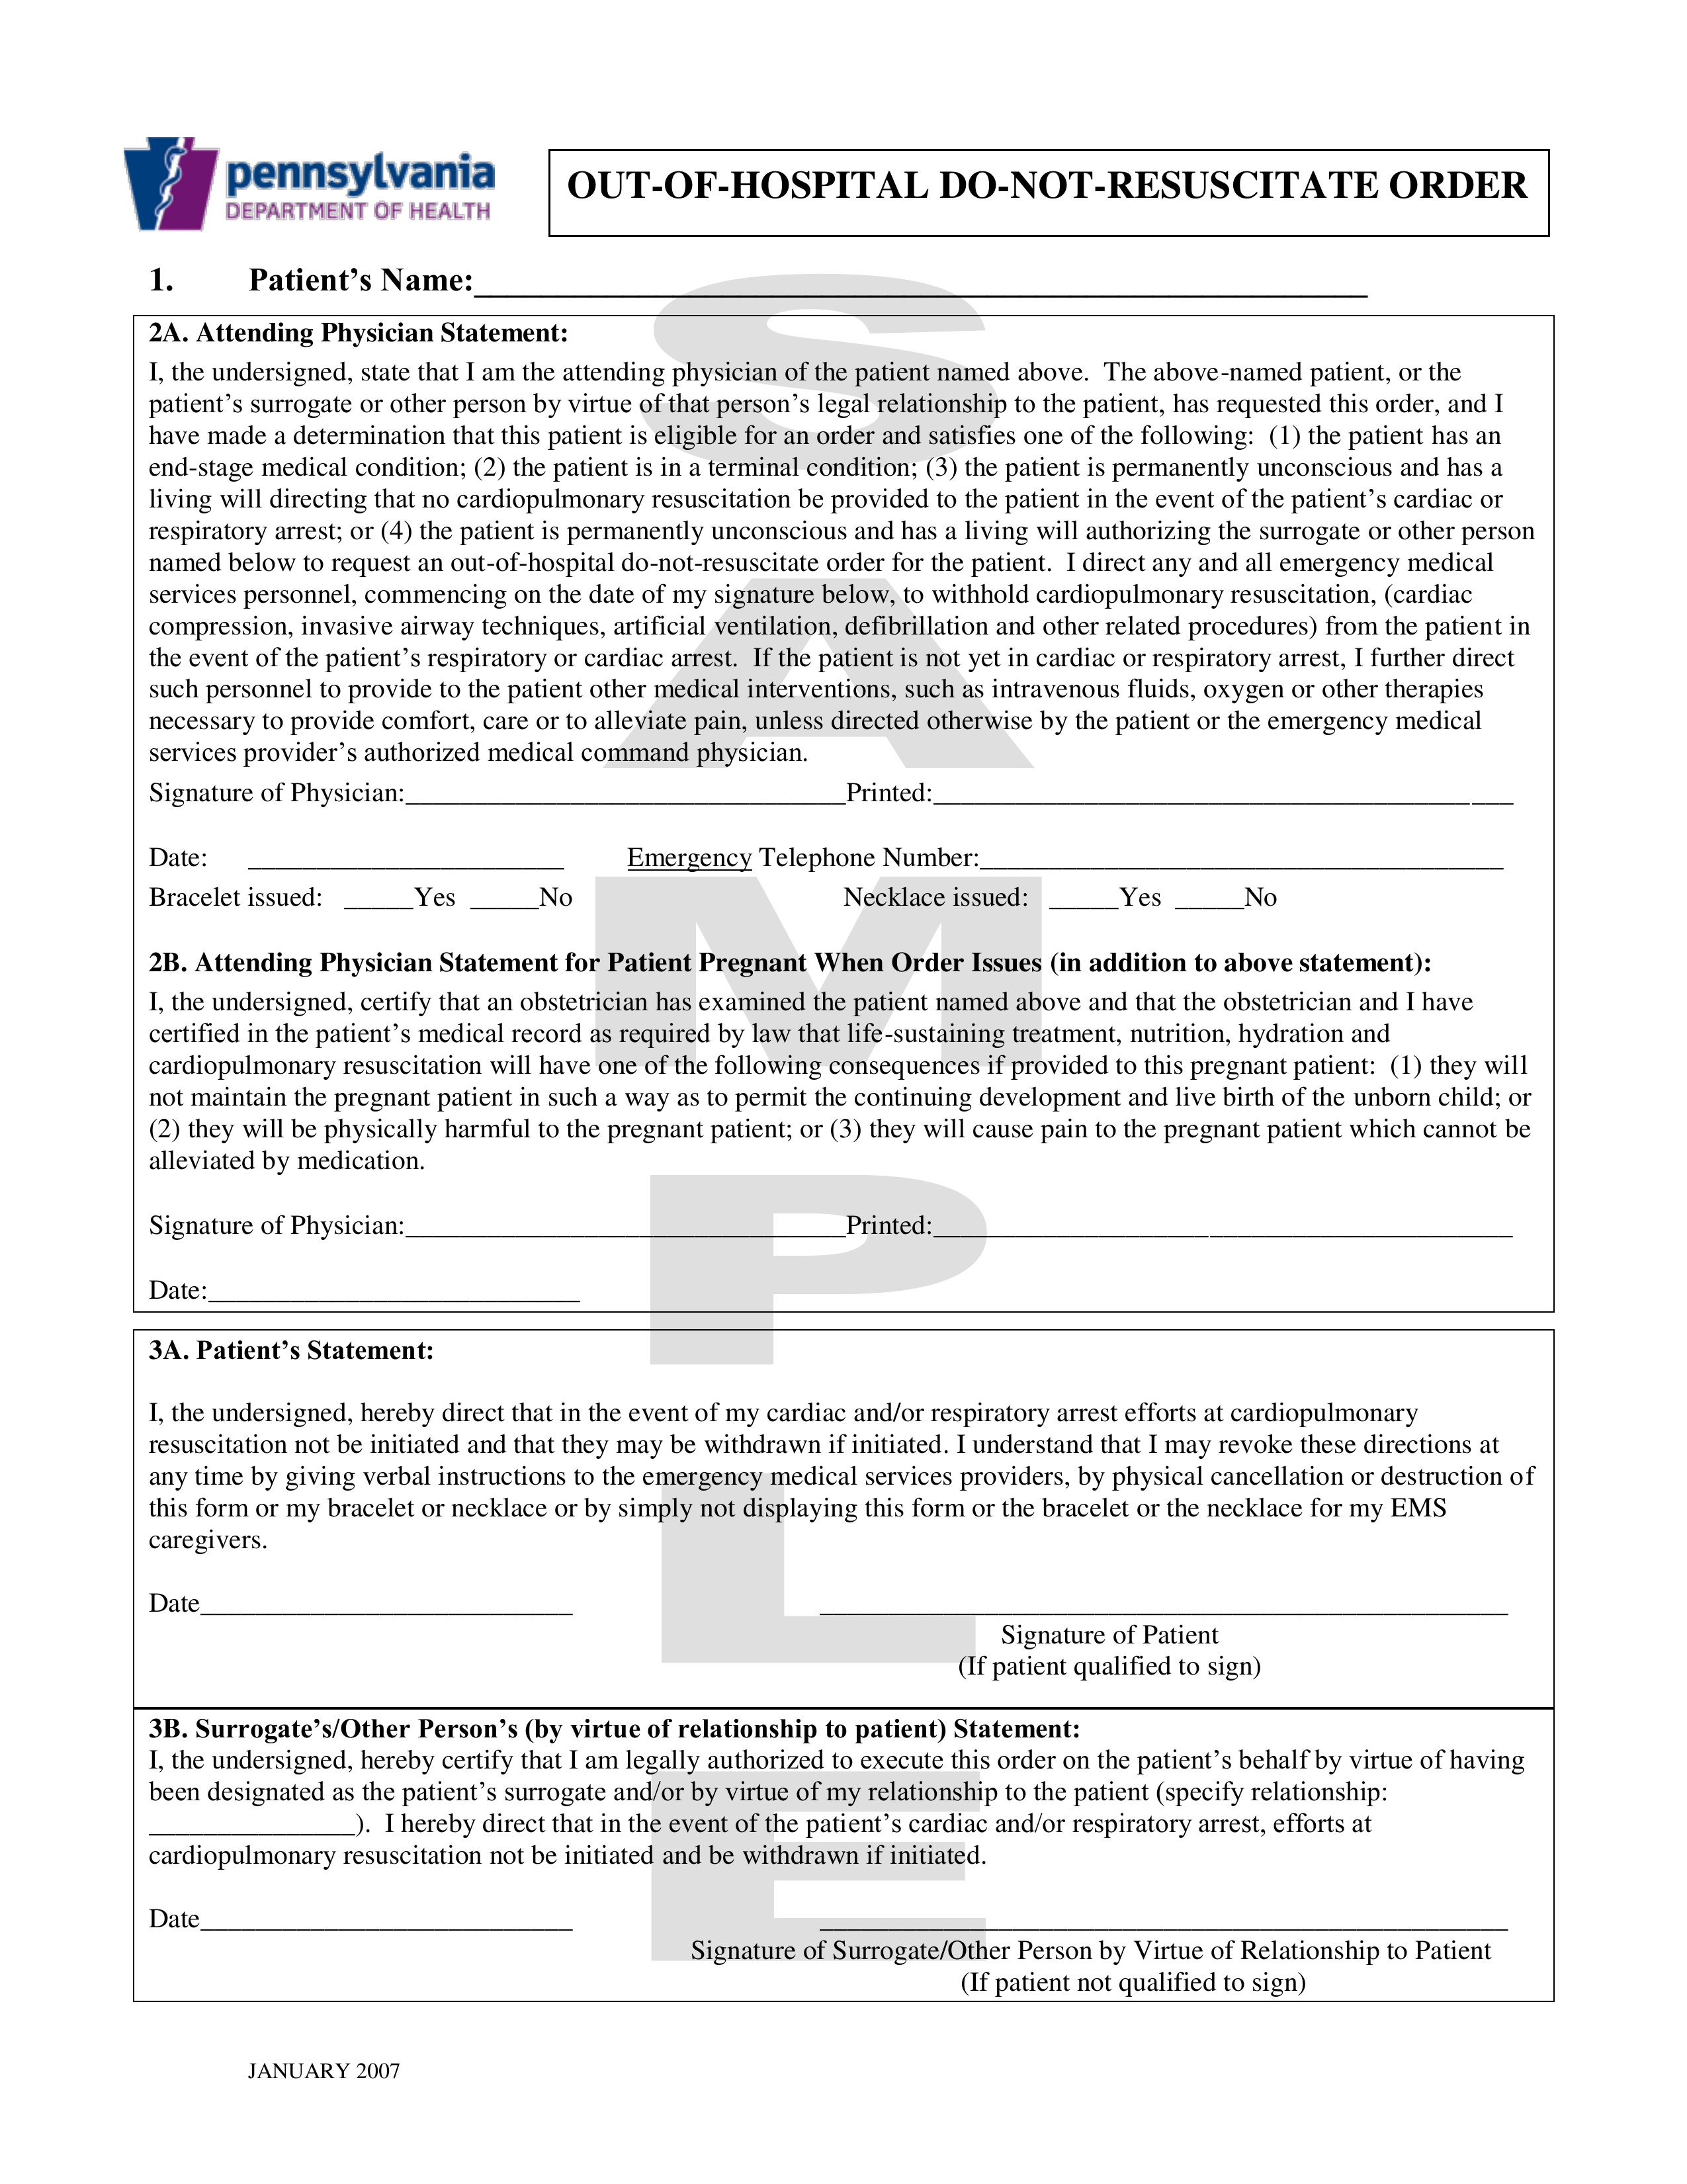 Pennsylvania Do Not Resuscitate (DNR) Order Form – Sample Only